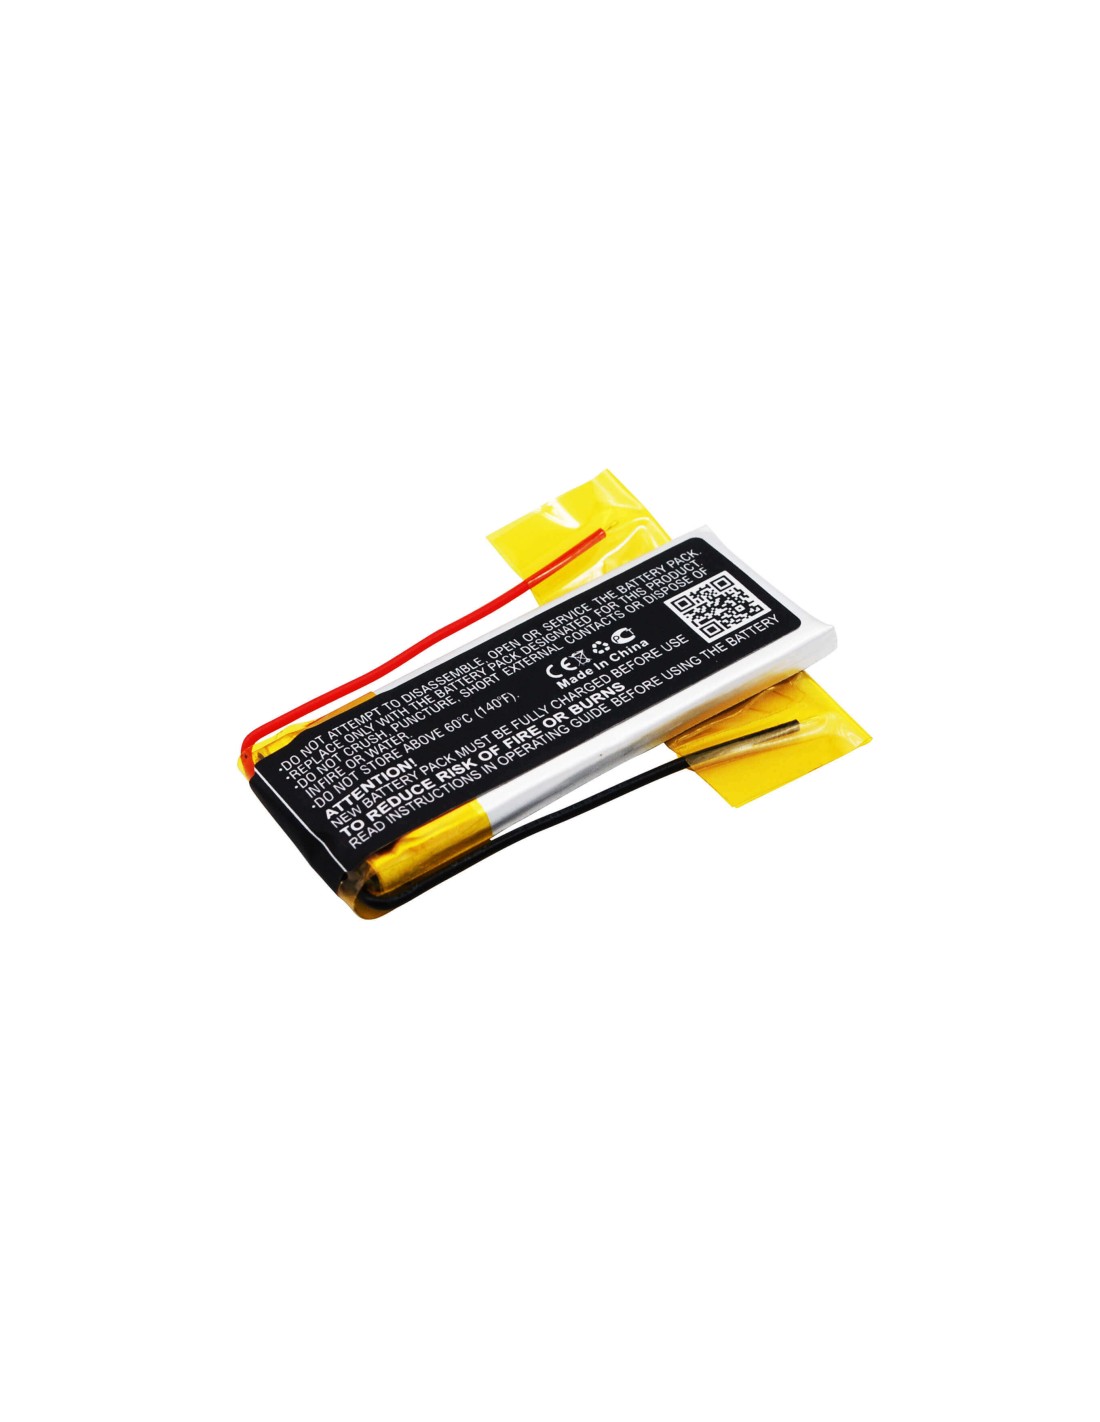 Battery for Cardo Scala Rider Q2, Q2 Pro 400mAh - 1.48Wh